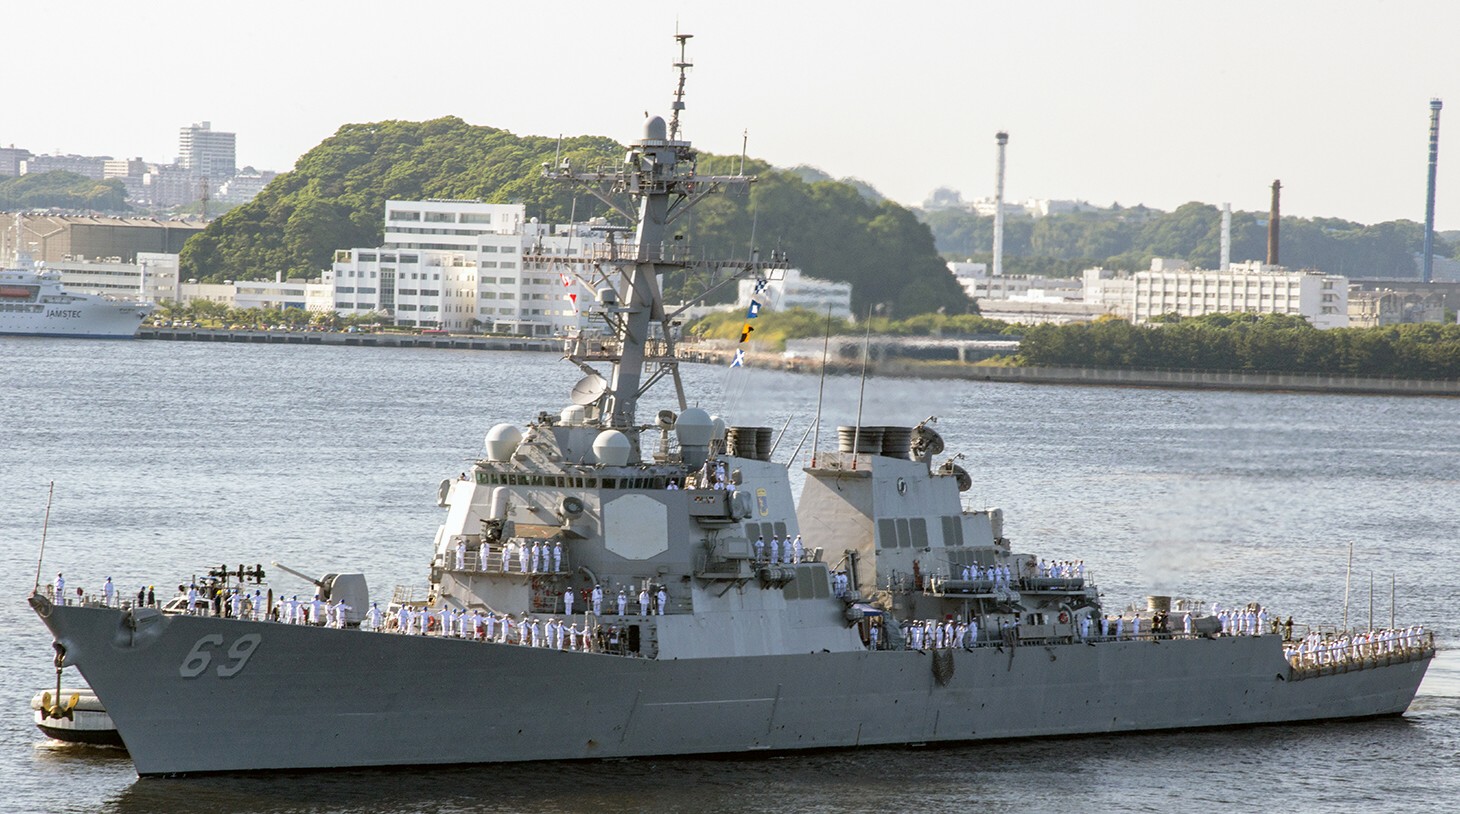 ddg-69 uss milius guided missile destroyer us navy ingalls shipbuilding pascagoula fleact yokosuka japan 15x